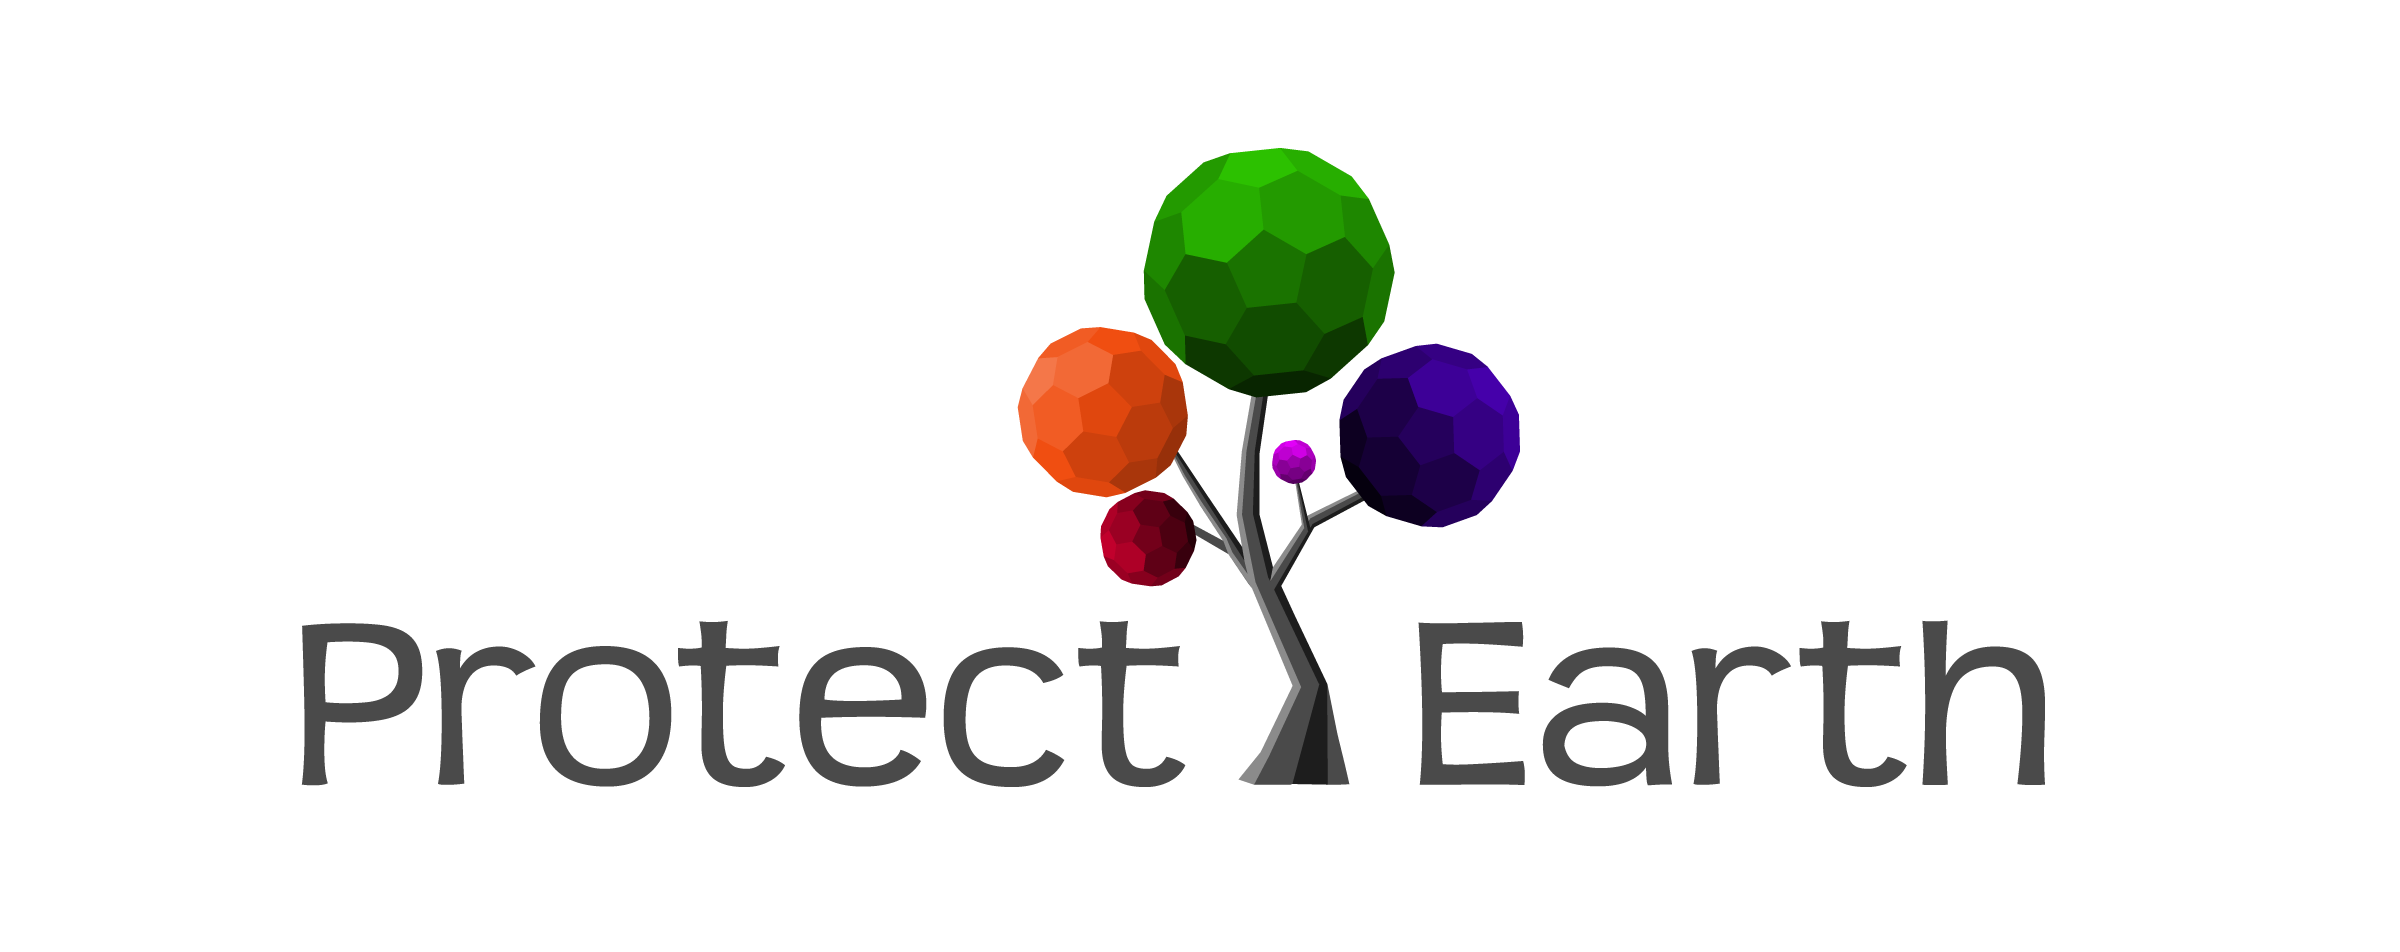 Protect Earth logo